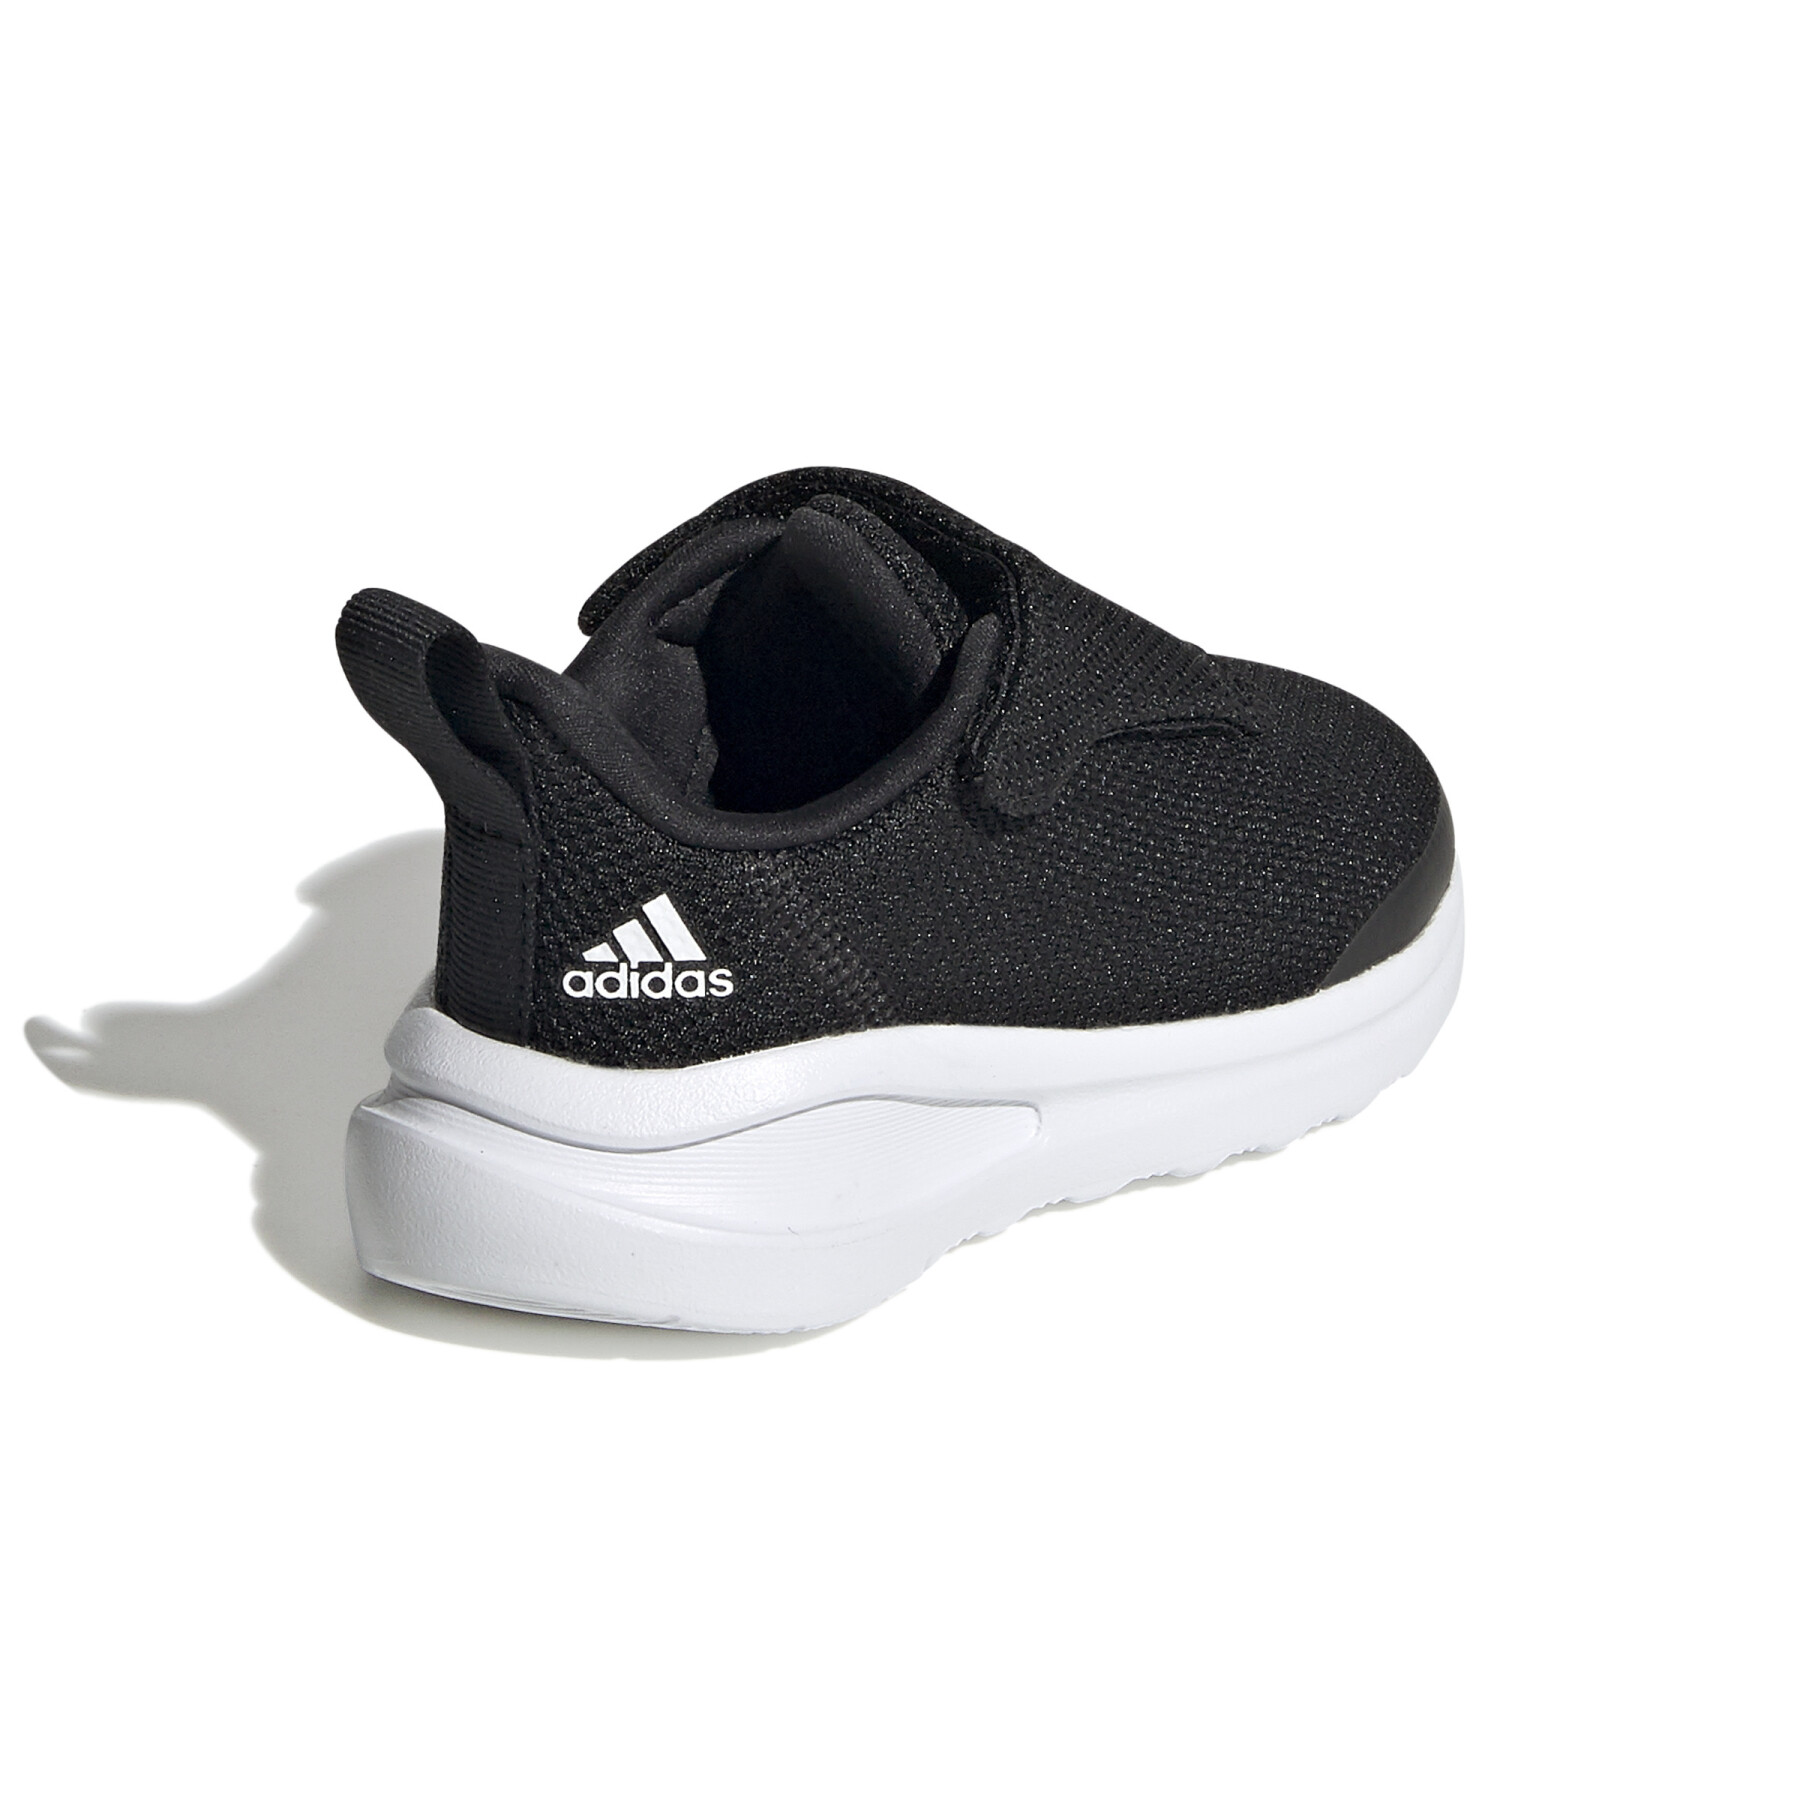 Children's sneakers adidas FortaRun AC Running